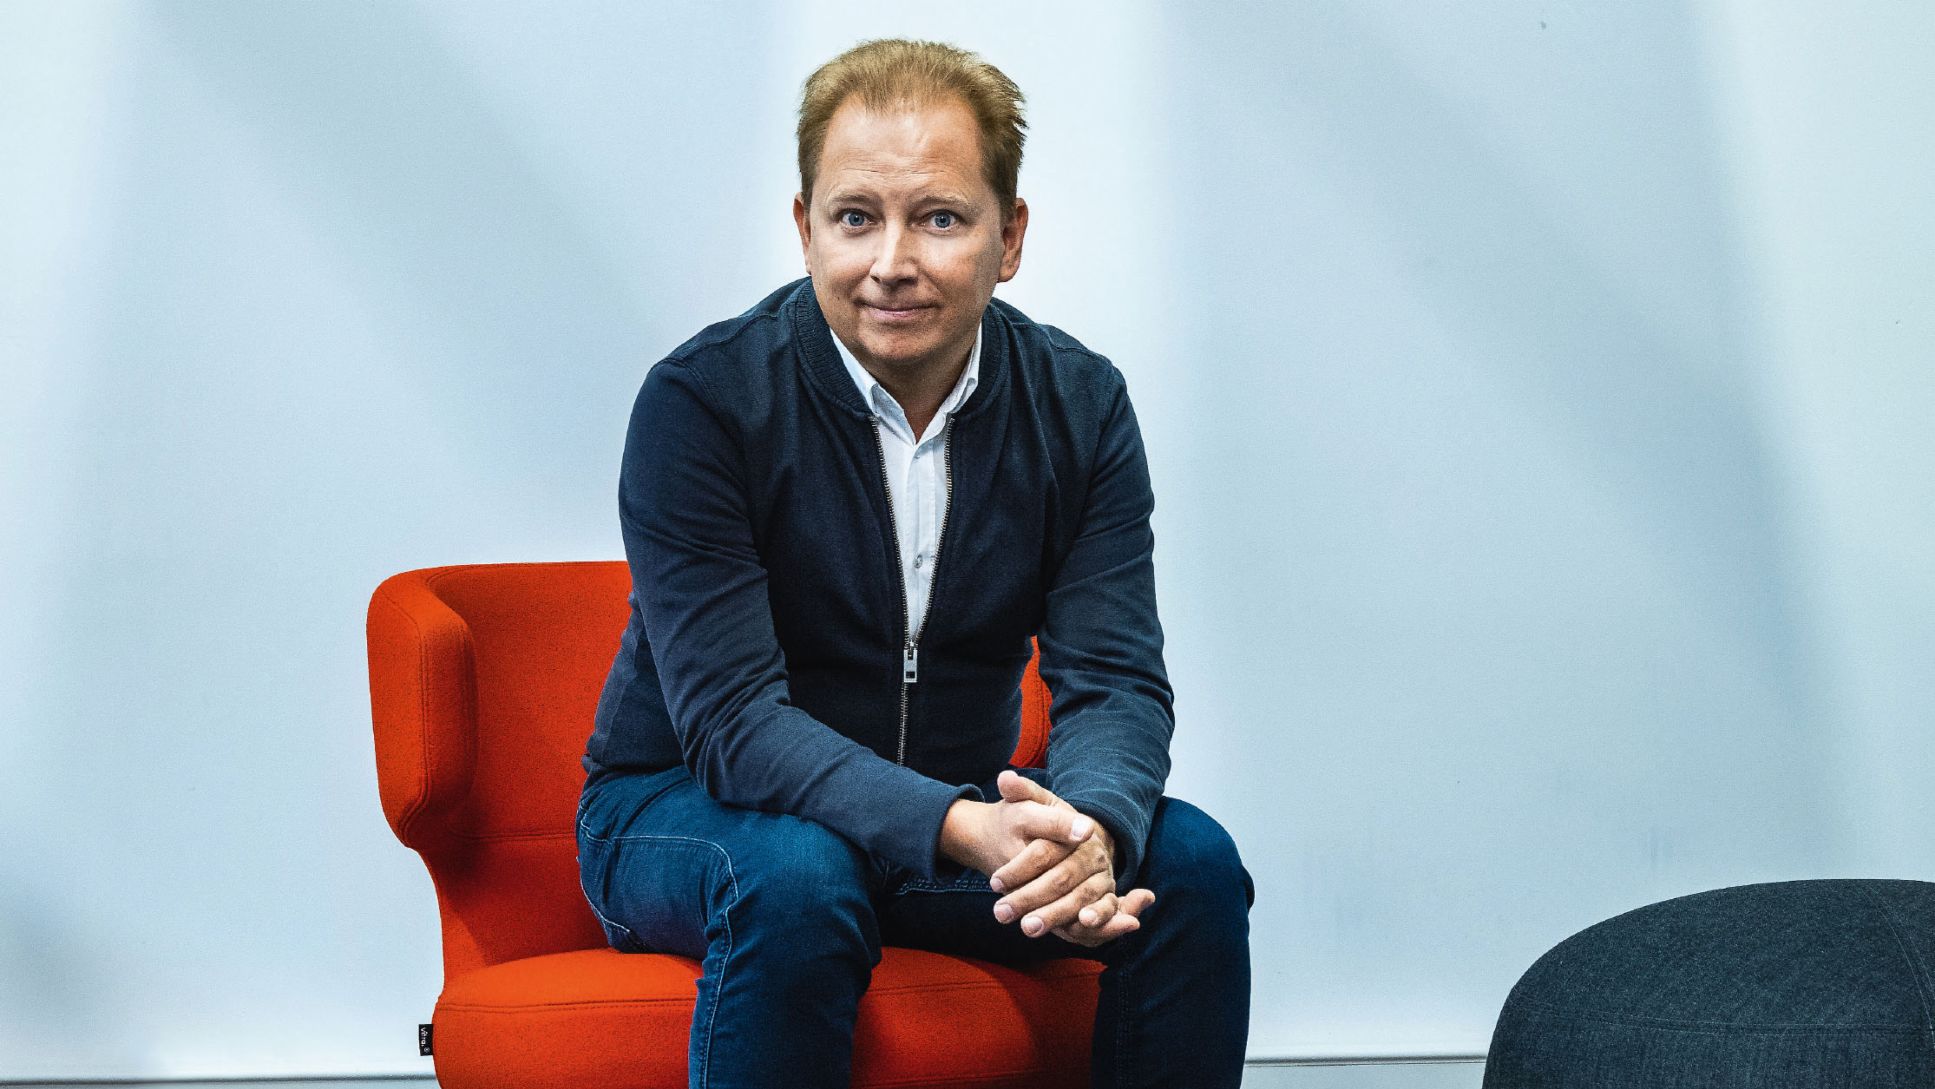 Тило Козловски, глава Porsche Digital GmbH, 2019, Porsche AG